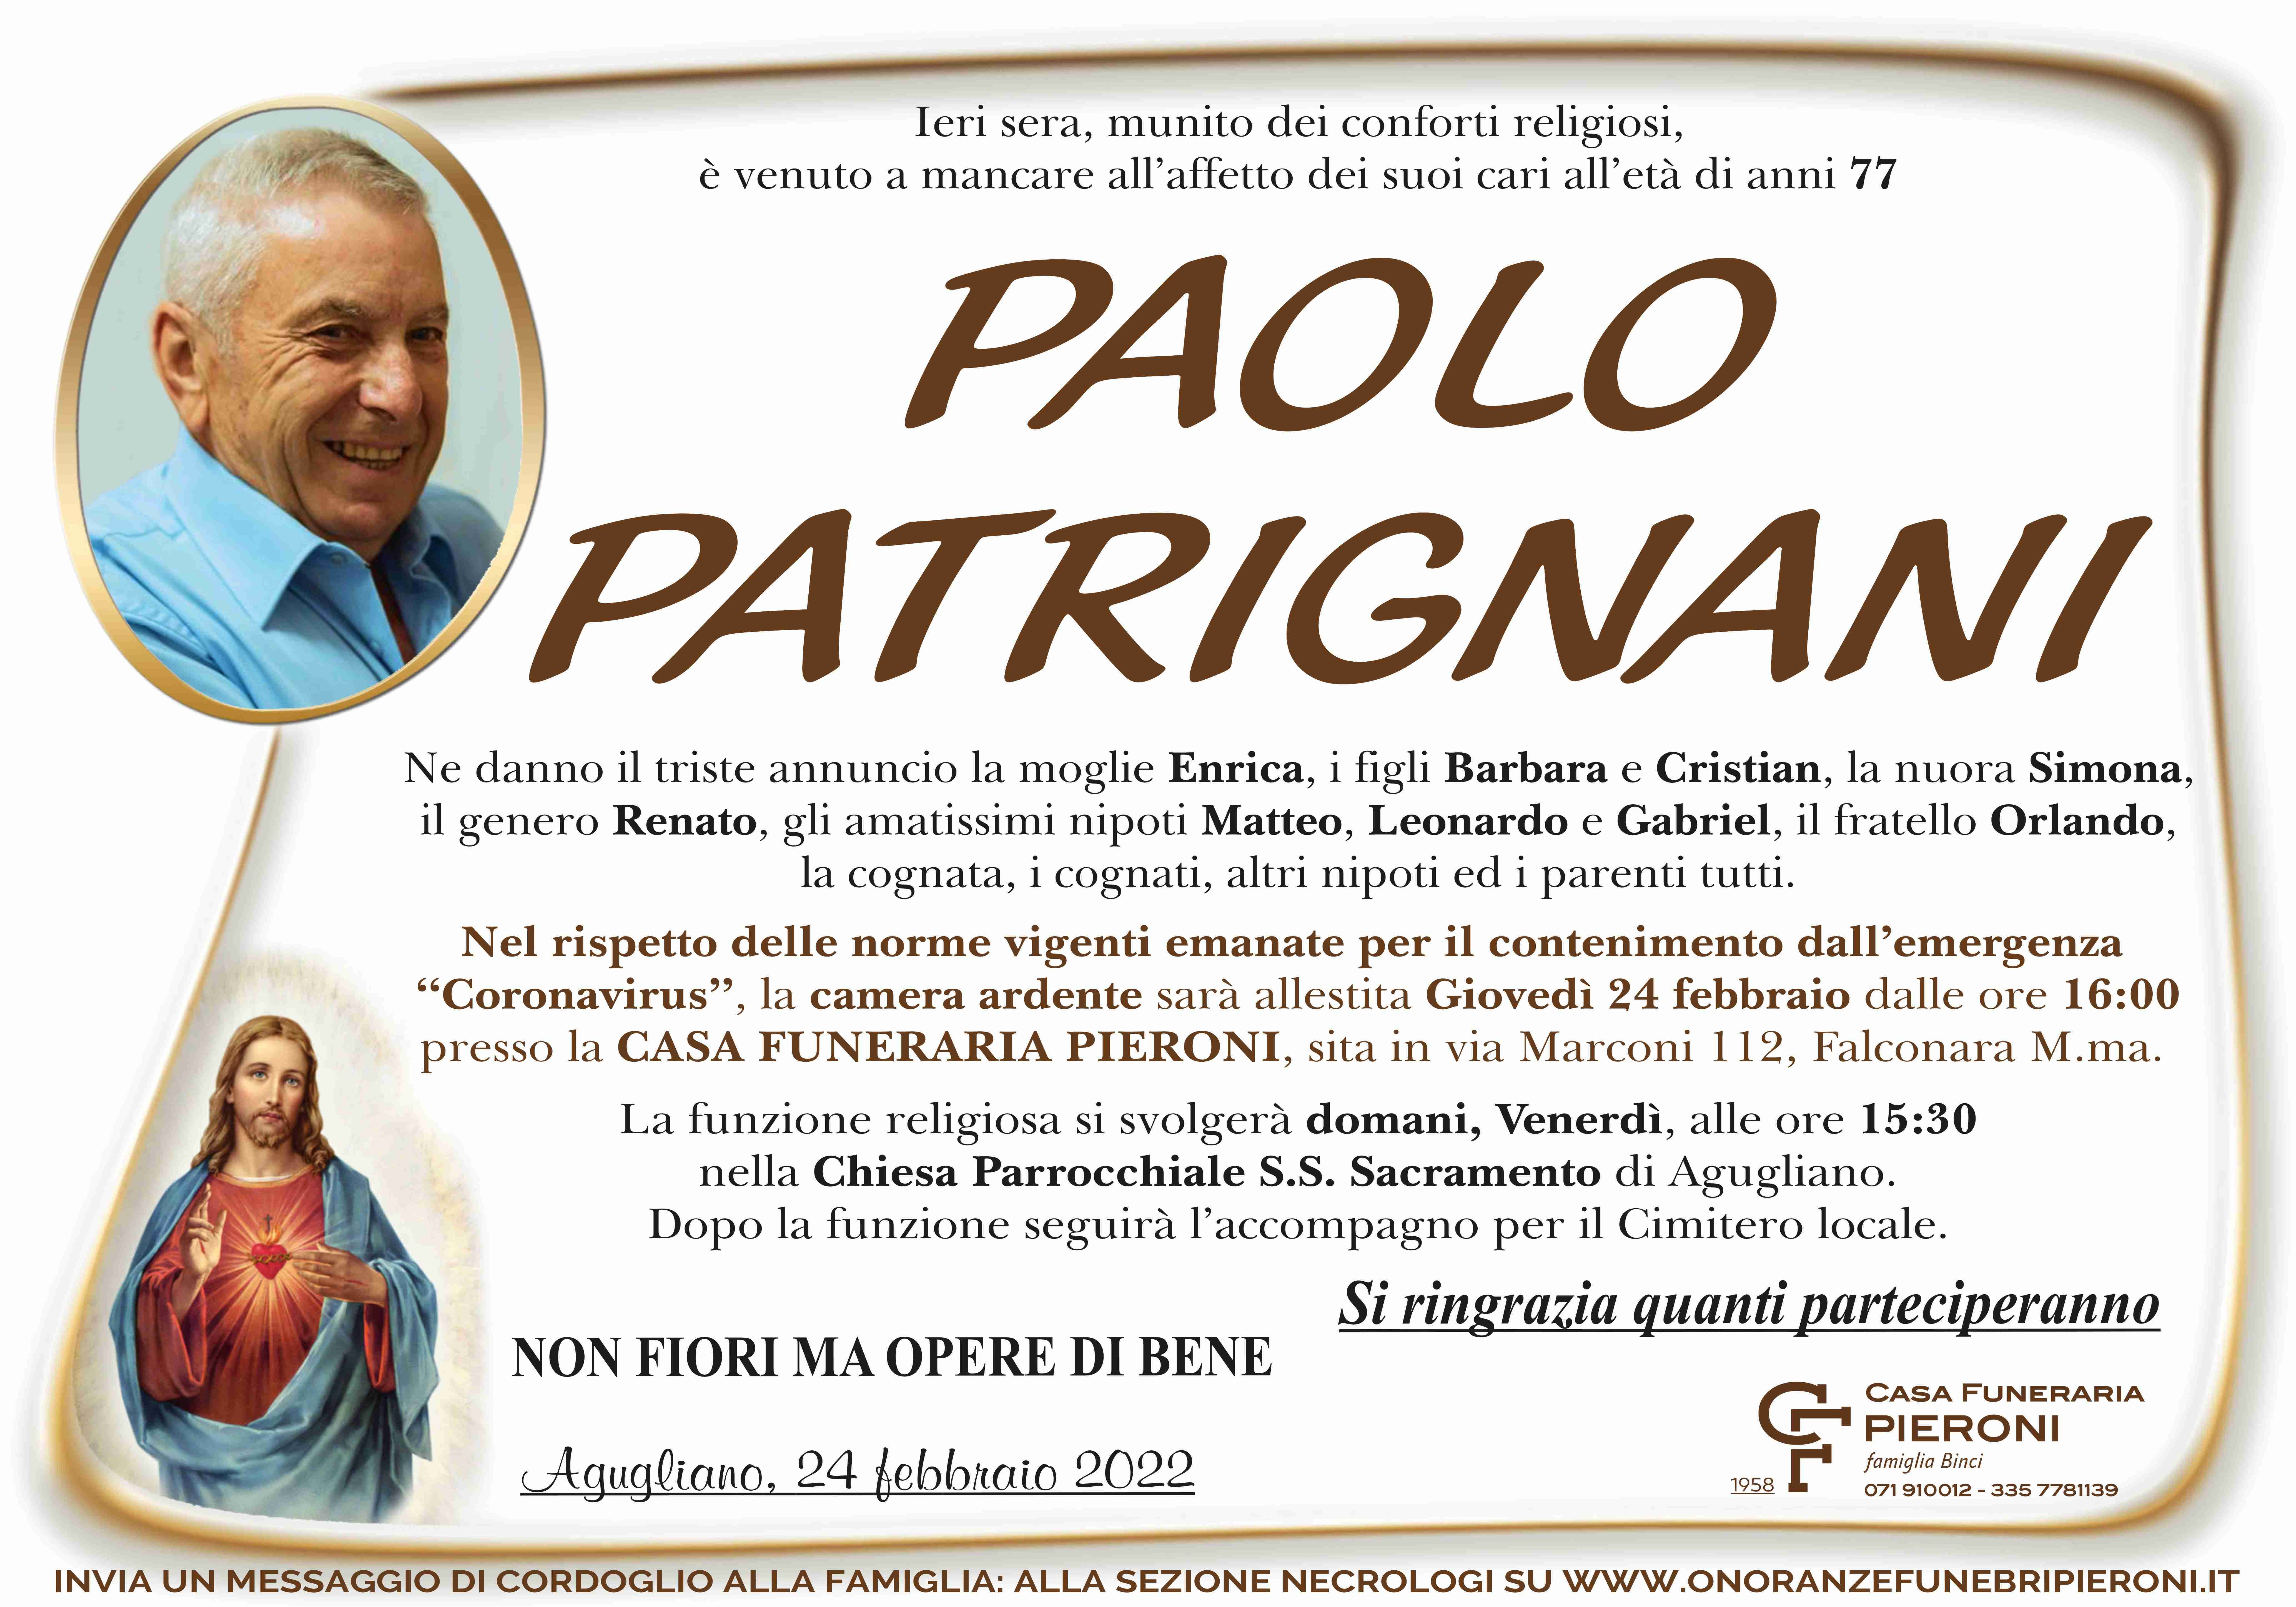 Paolo Patrignani